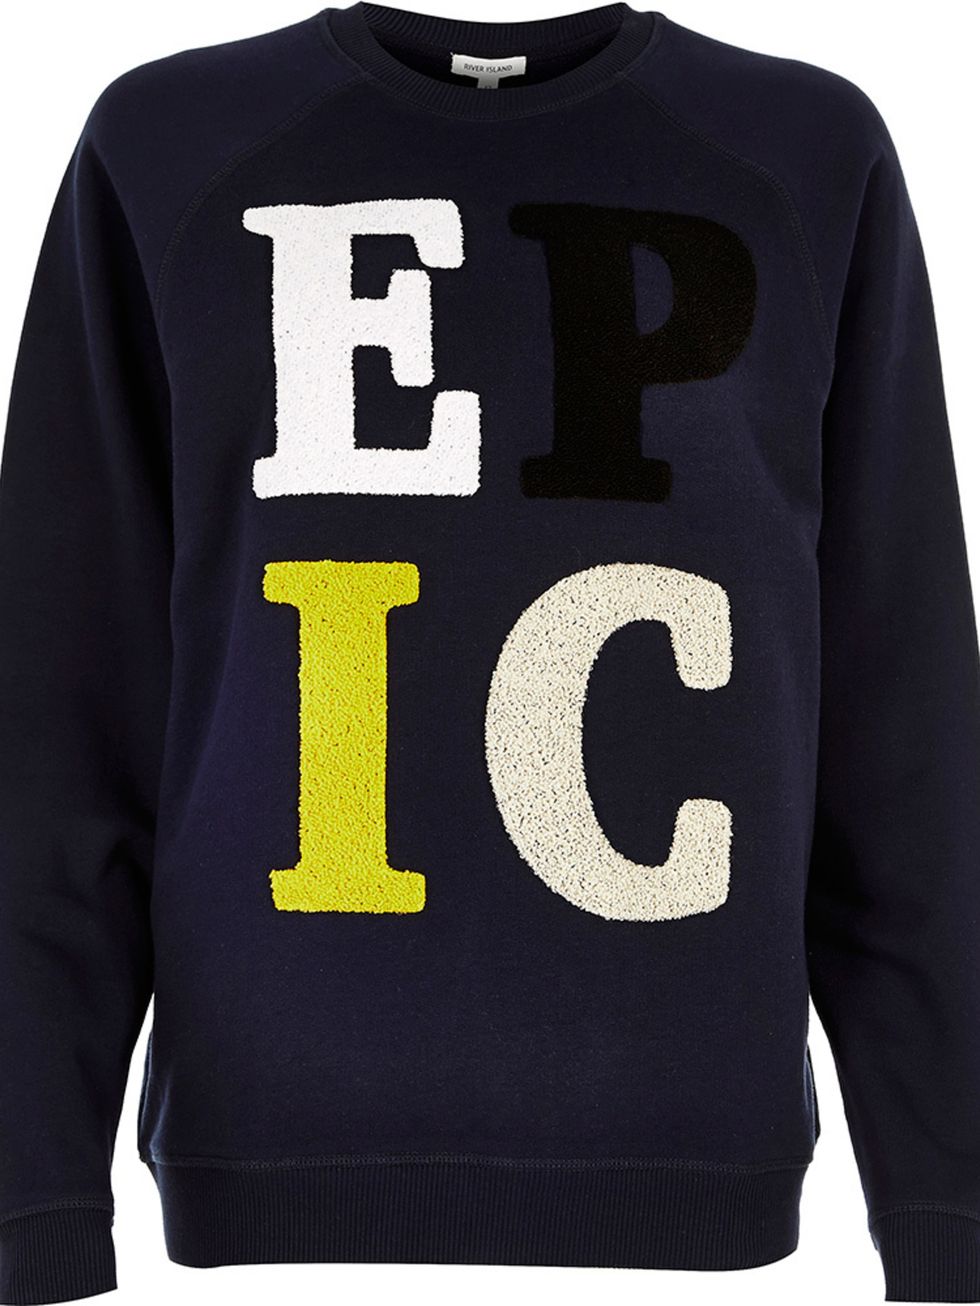 <p>Fashion Intern, Emi Papanikola will be teaming this sweatshirt with her favourite boyfriend jeans.</p>

<p>River Island, £28 + your RI 25% discount card = £21</p>